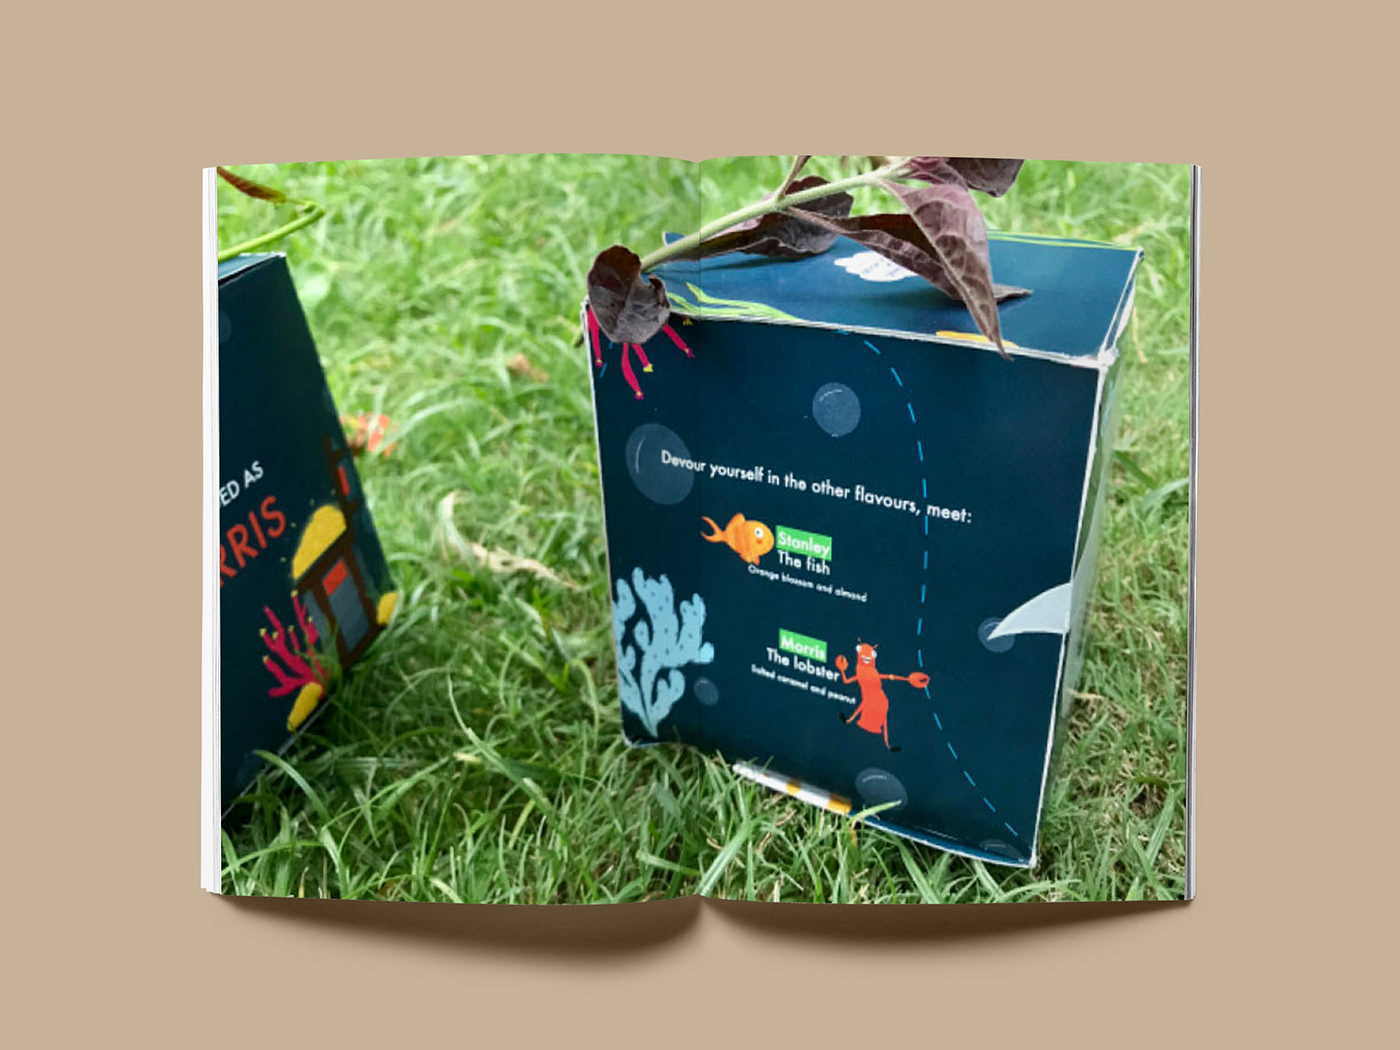 recyclable story kids the bravest fish matt buckingham Procreate magazine Photography  product Packaging & Branding